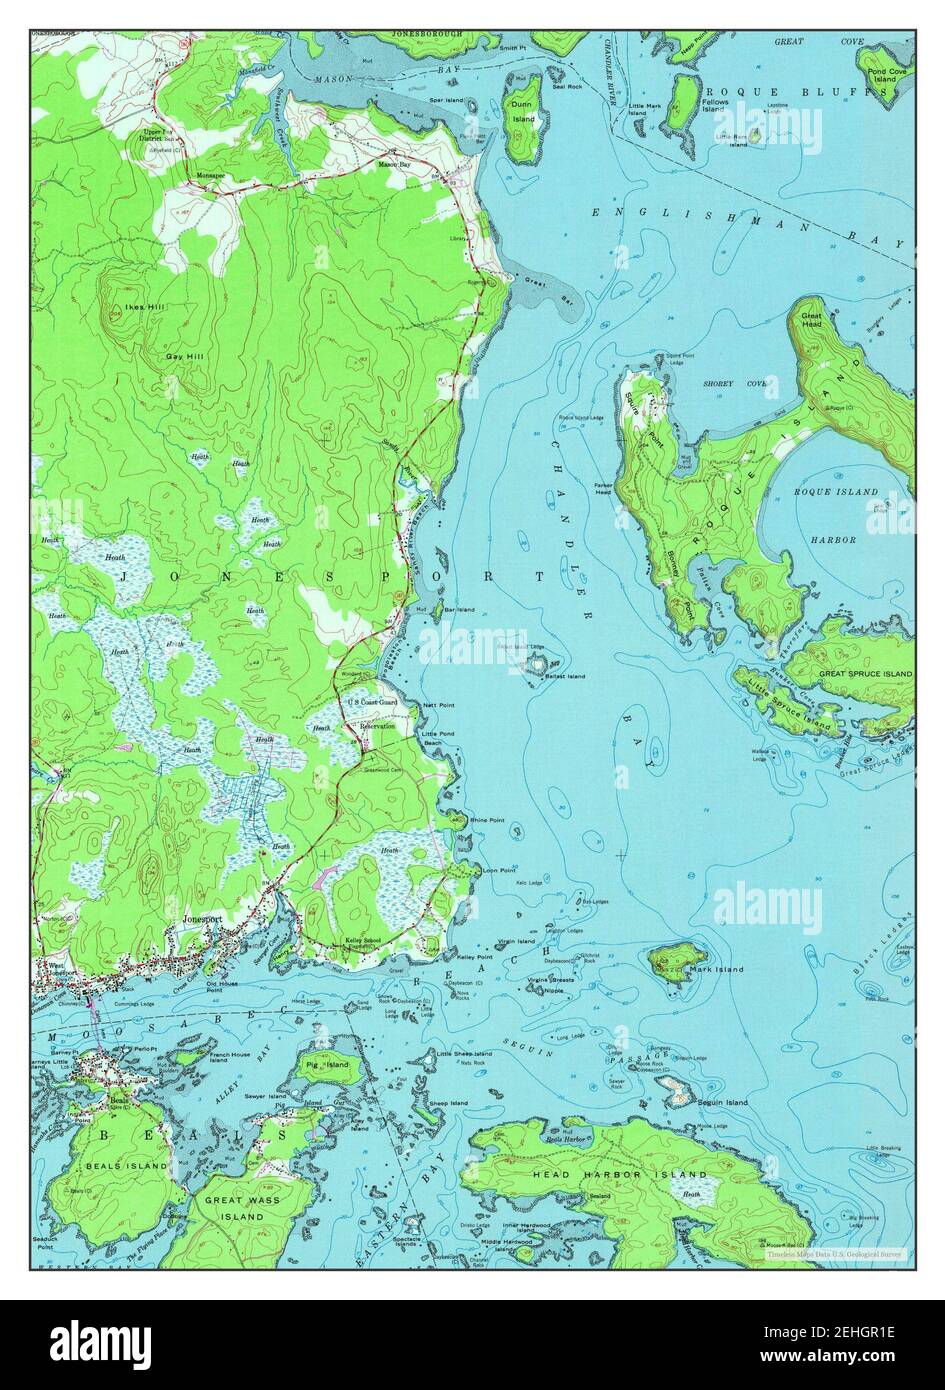 Jonesport, Maine, map 1948, 1:24000, United States of America by Timeless Maps, data U.S. Geological Survey Stock Photo